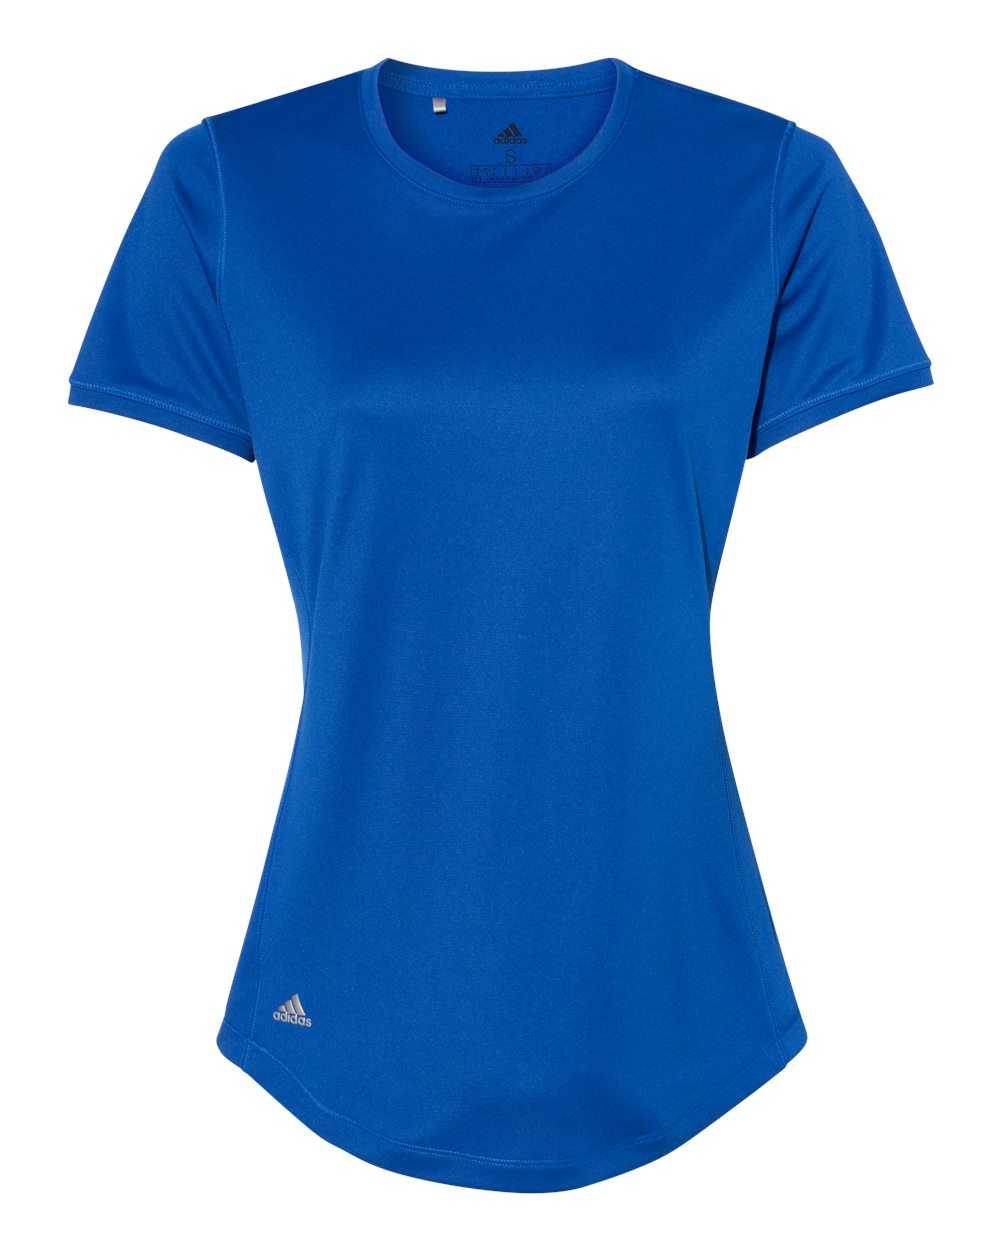 Adidas A377 Women's Sport T-Shirt - Collegiate Royal - HIT a Double